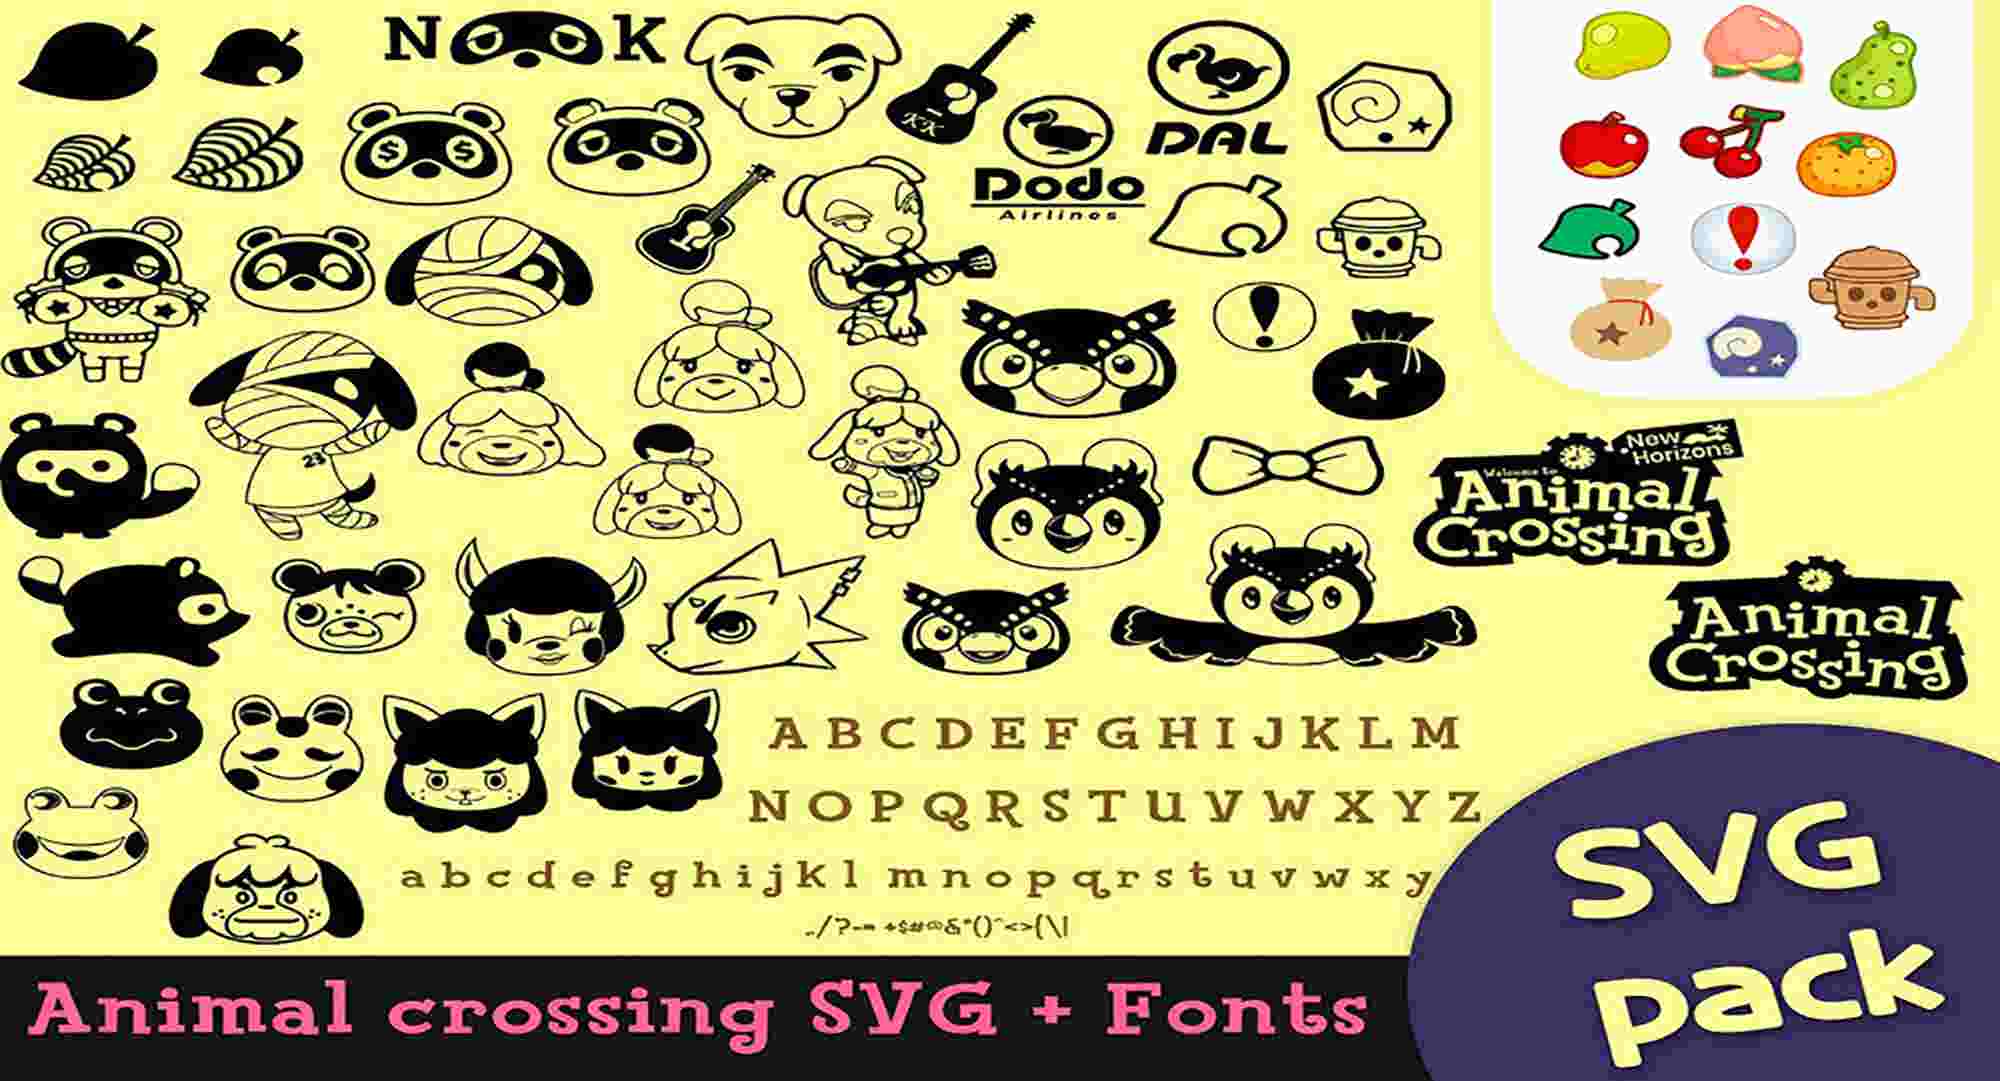 Free Free 255 Svg Mega Pack For Whiteboard Videos Free Download SVG PNG EPS DXF File